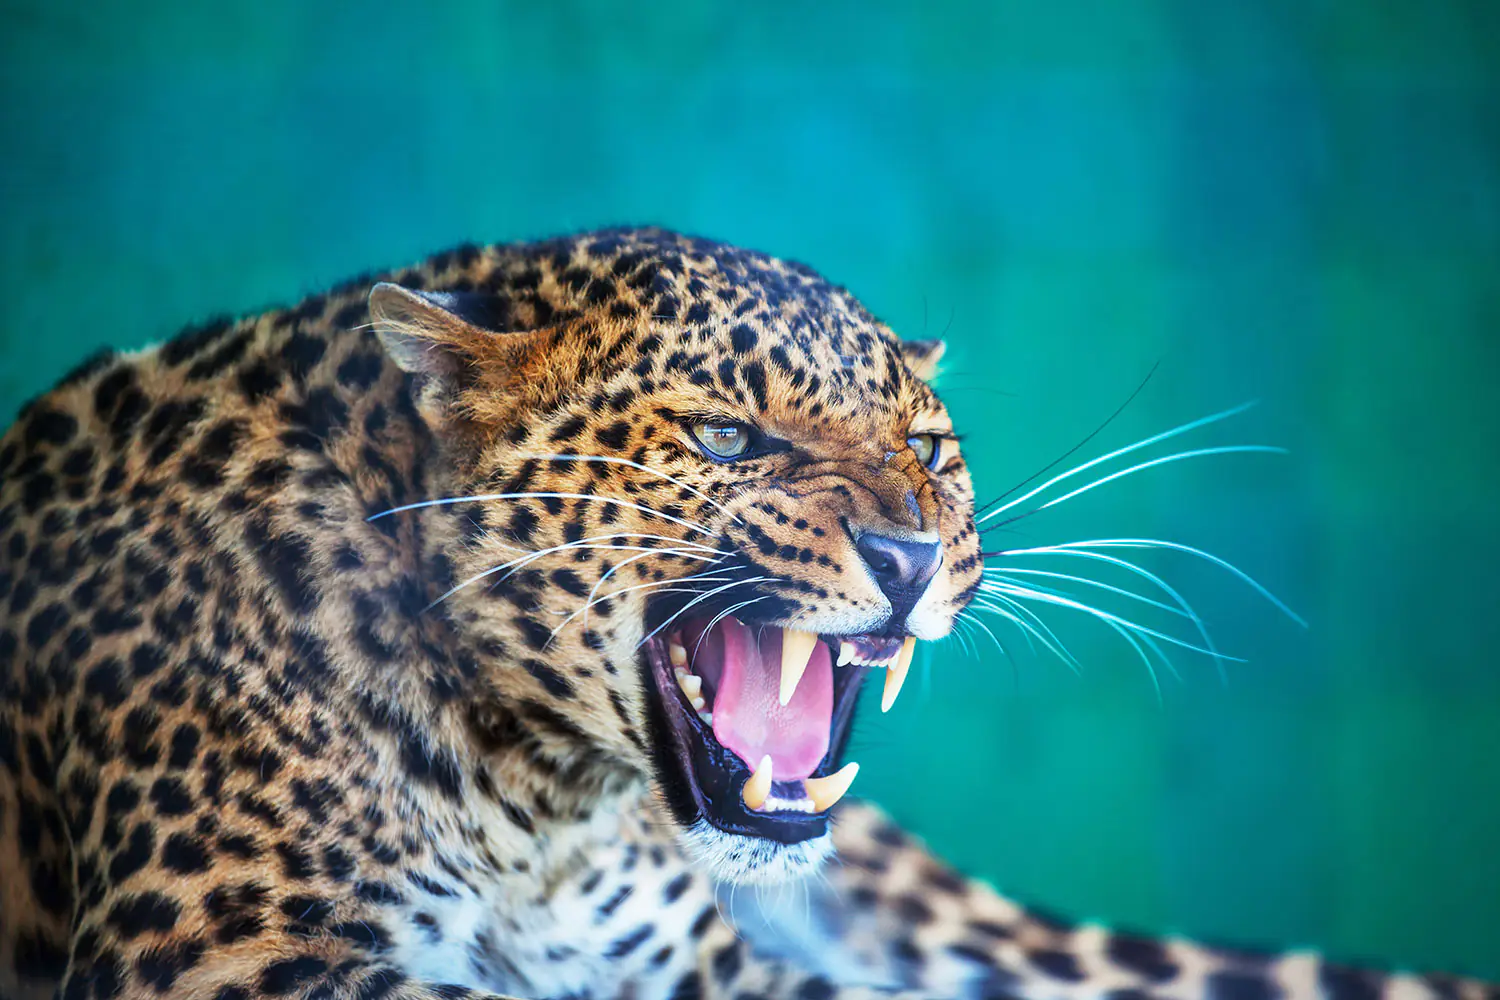 Fototapete Achtung Leopard